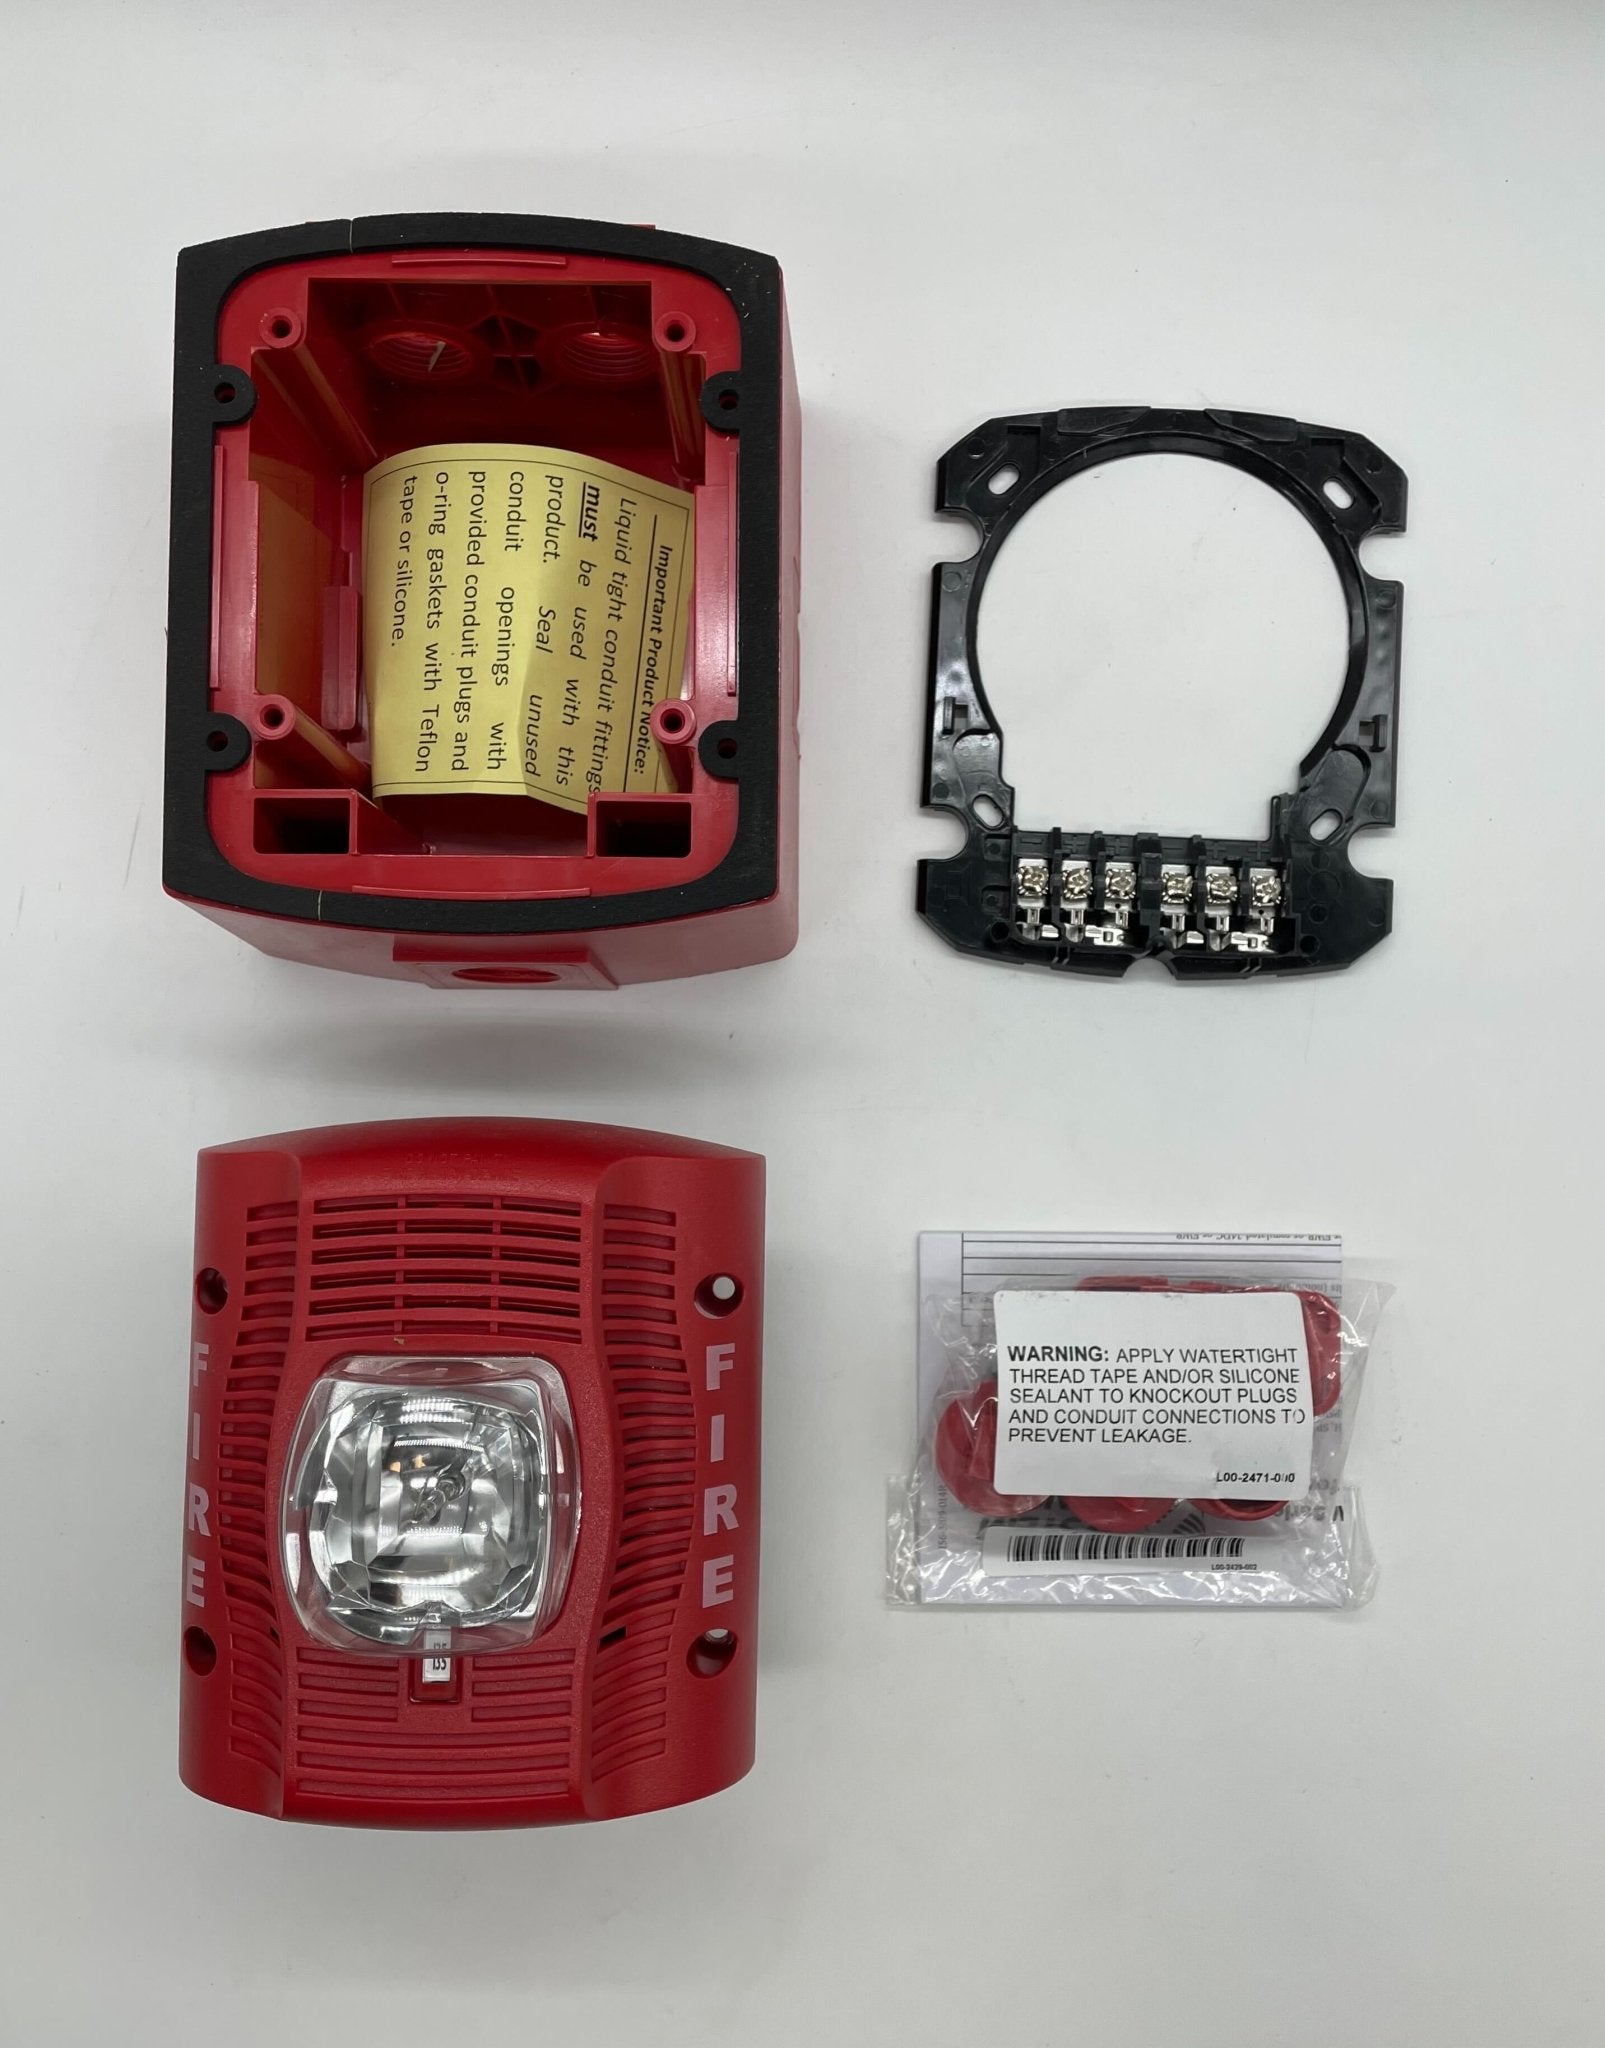 System Sensor SPSRHK - The Fire Alarm Supplier